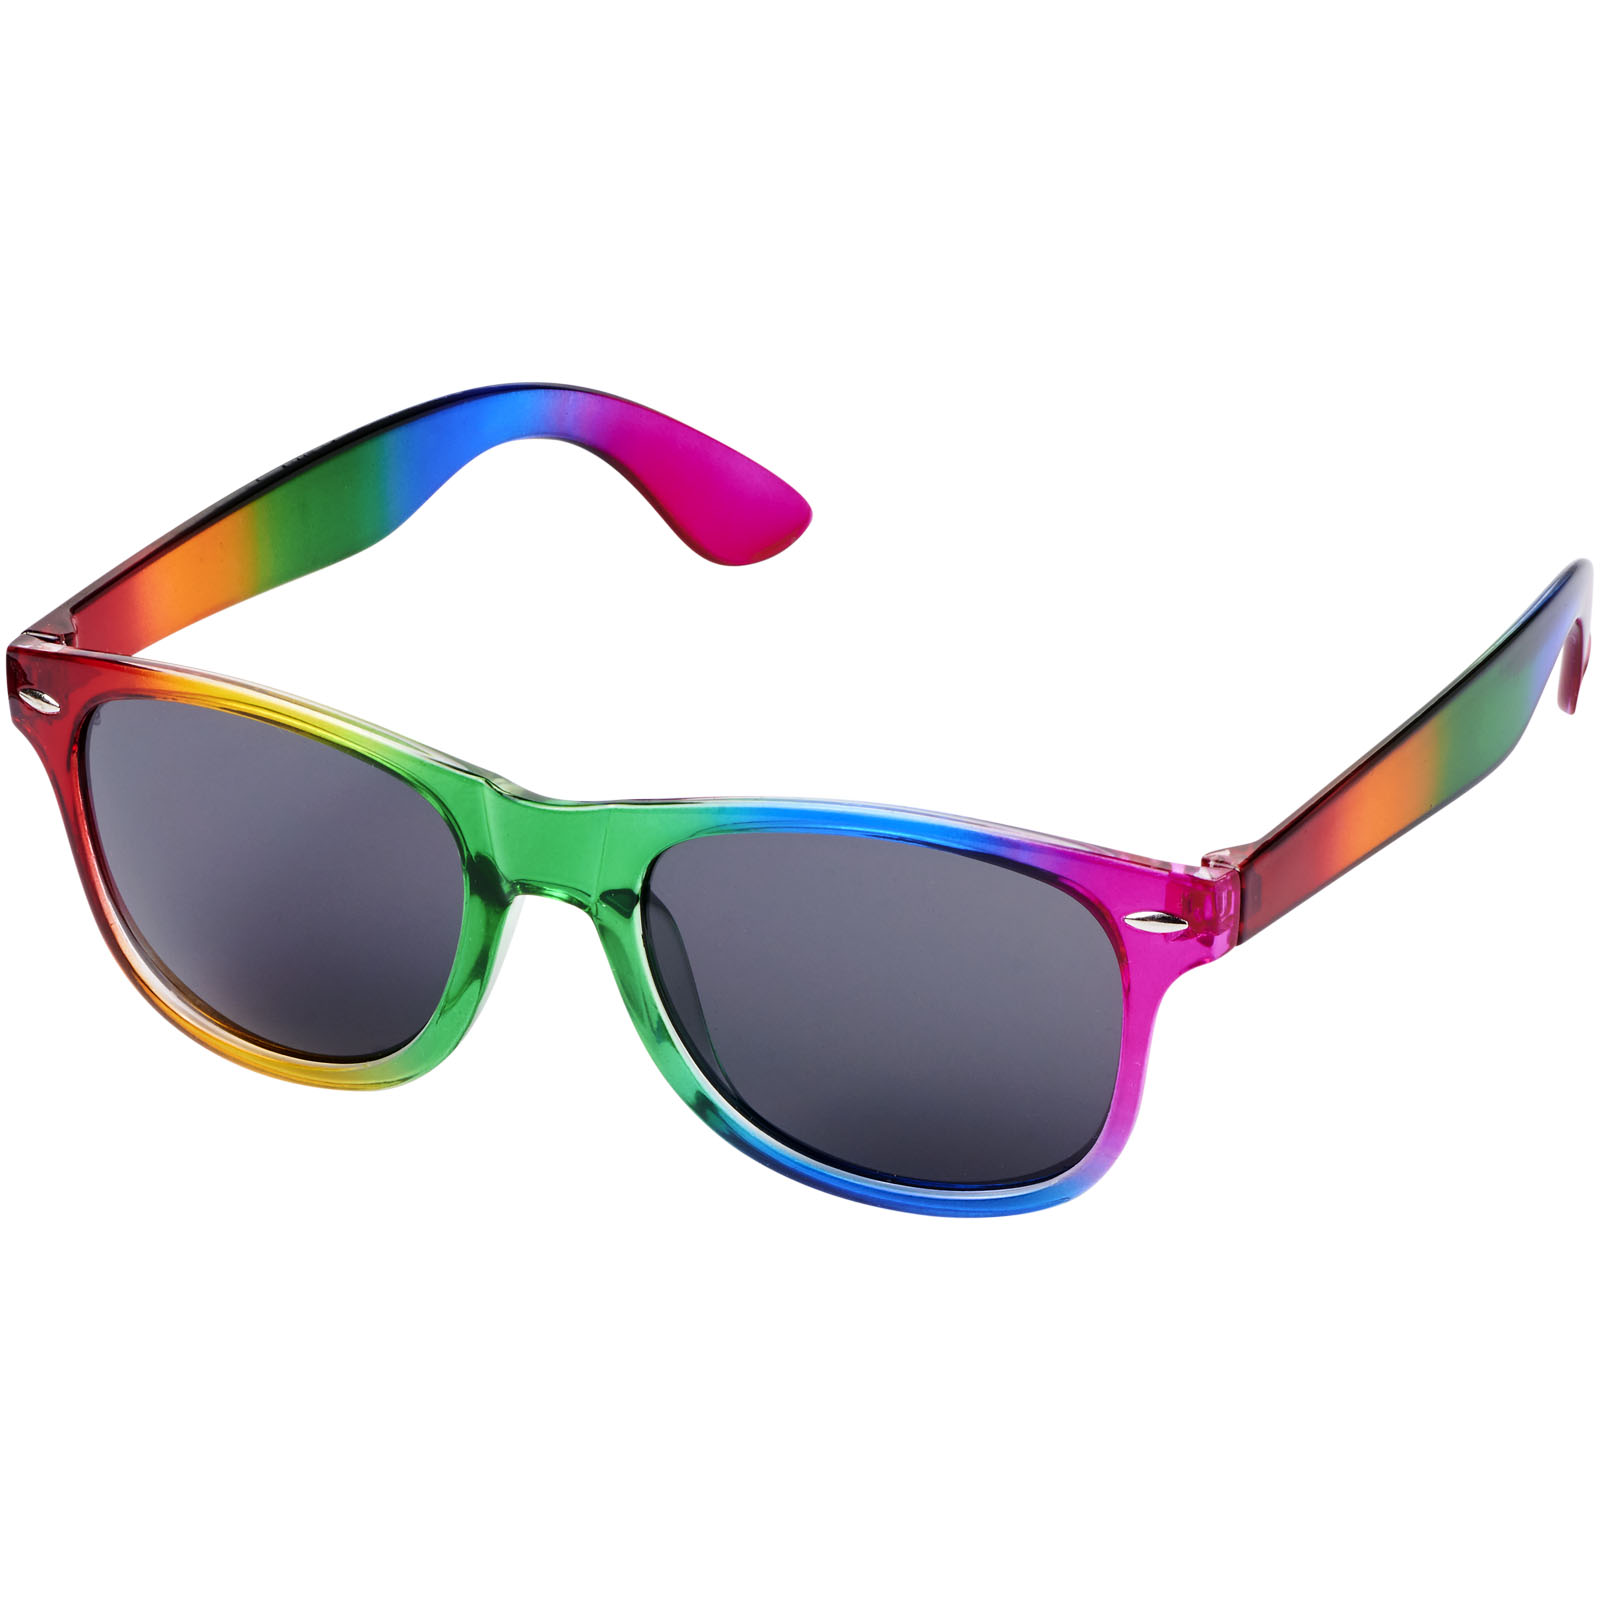 Sunglasses - Sun Ray rainbow sunglasses